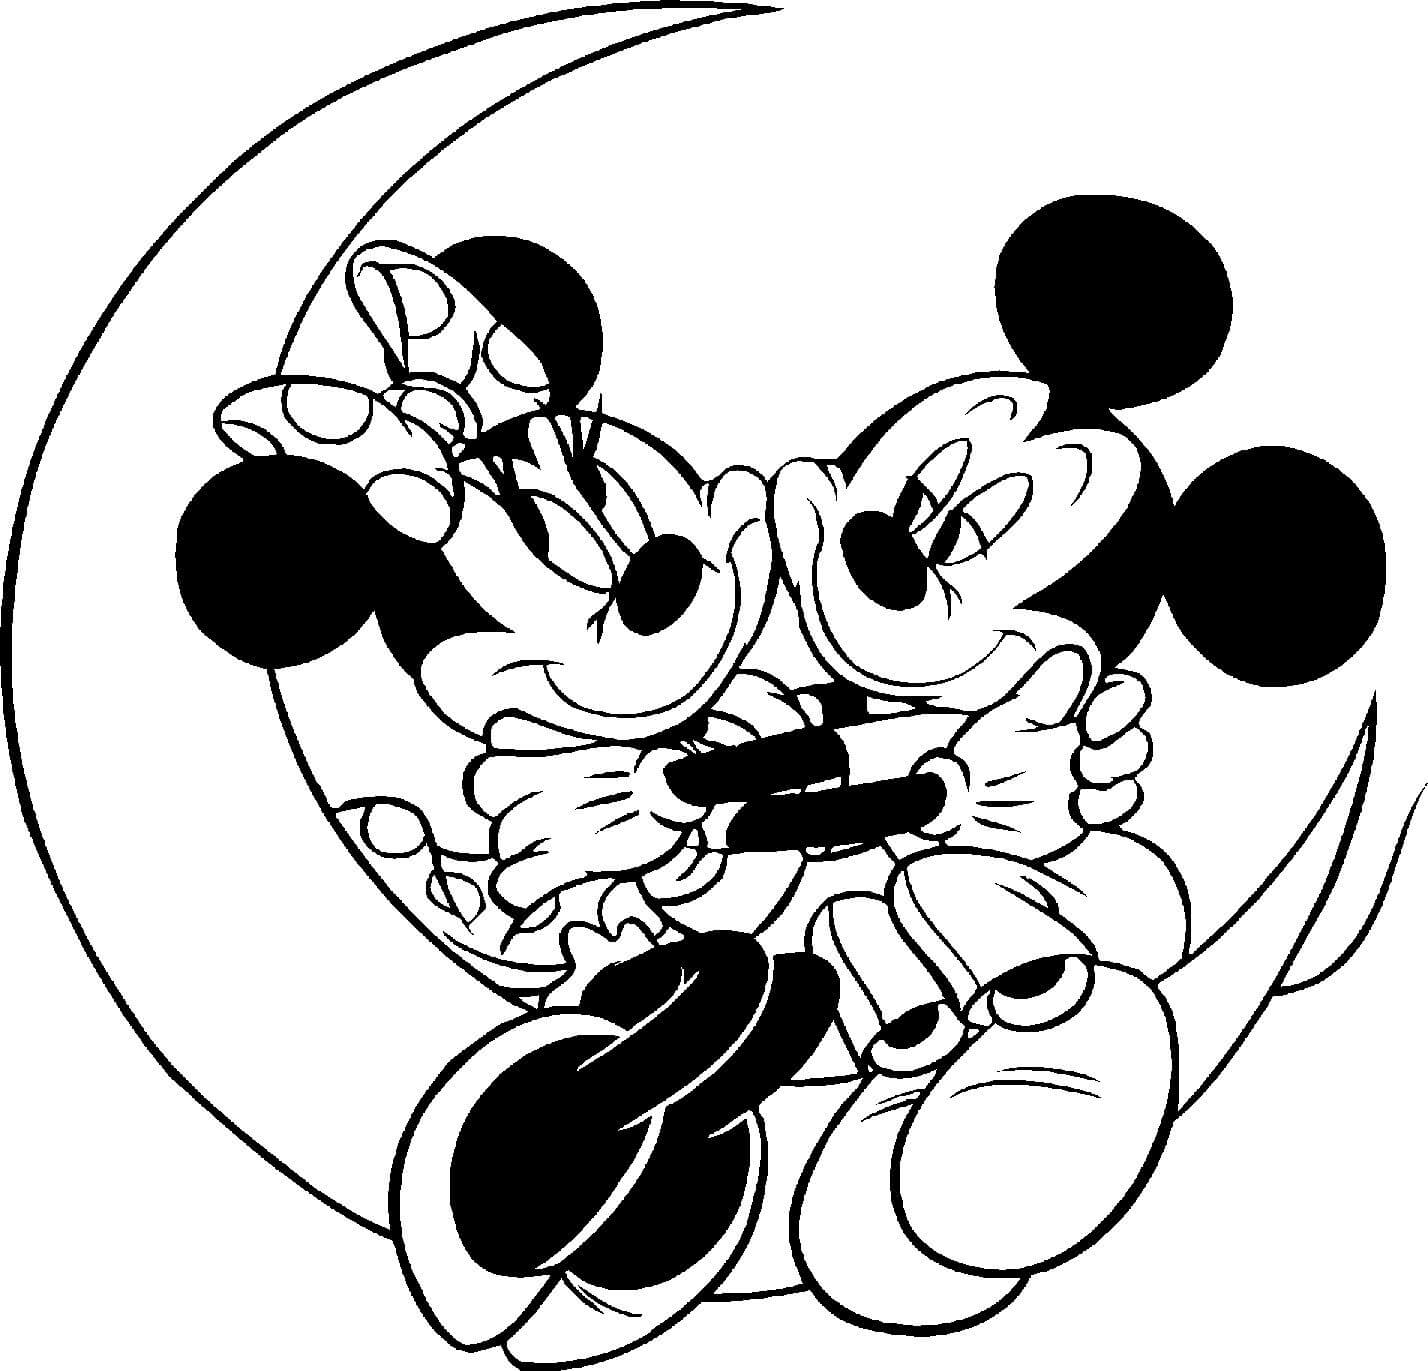 Mickey en Minnie Mouse op de maan